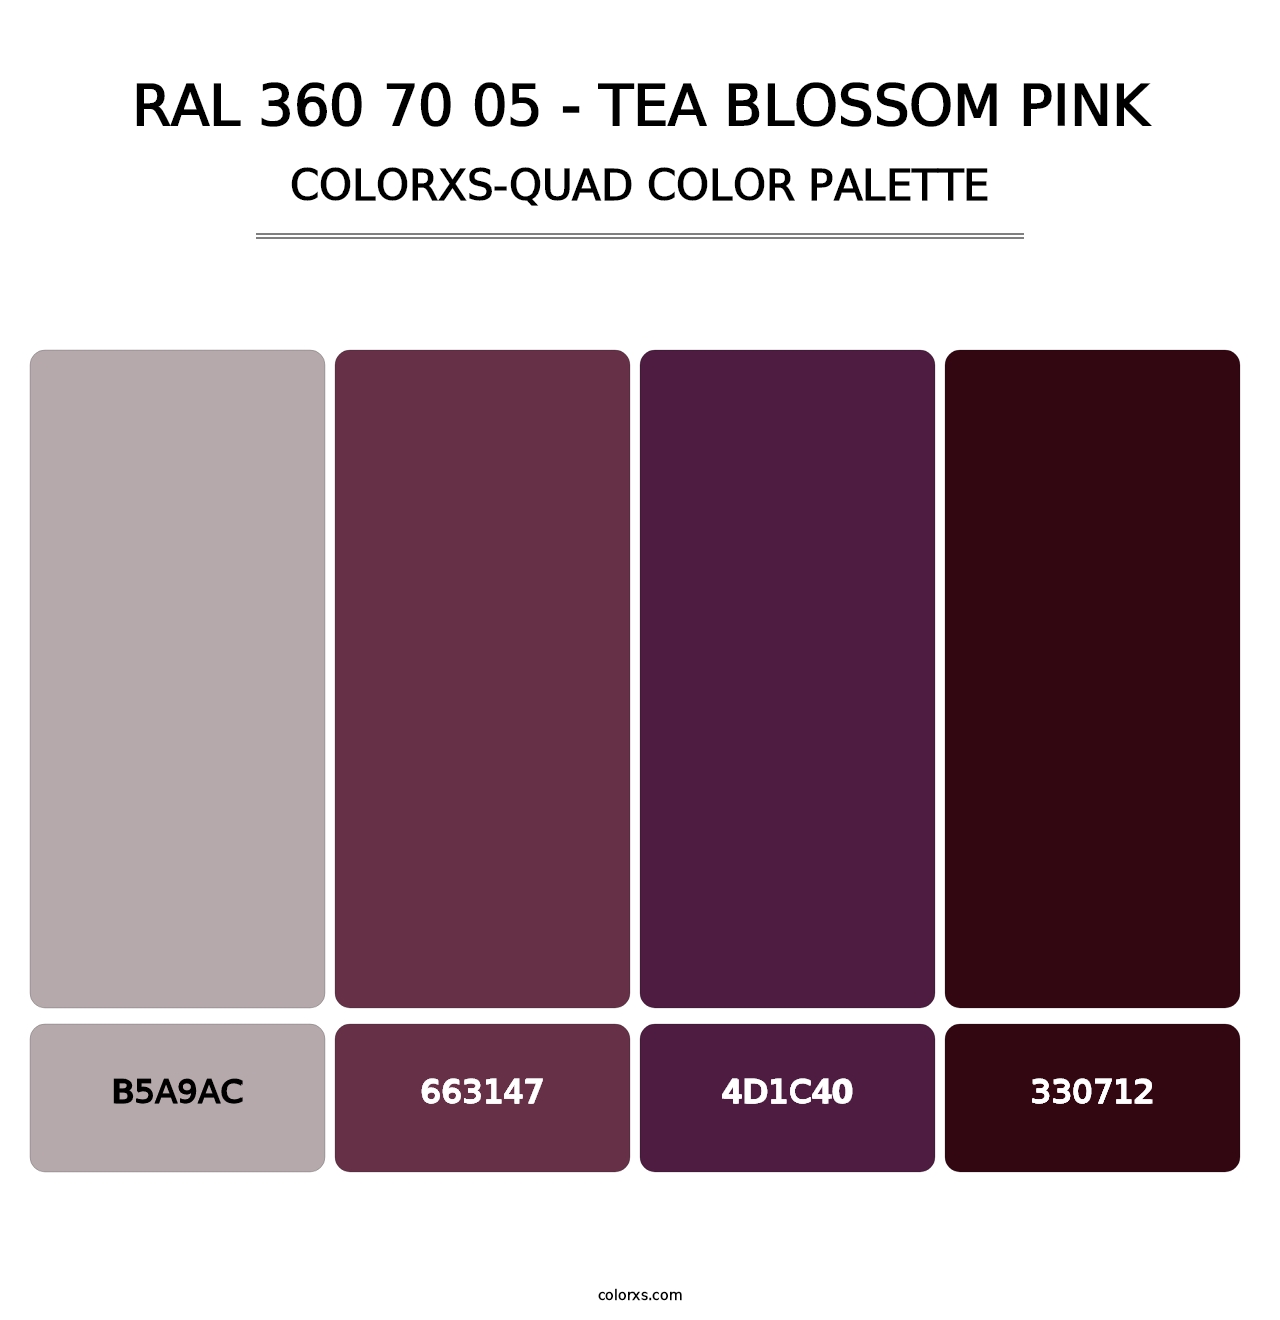 RAL 360 70 05 - Tea Blossom Pink - Colorxs Quad Palette